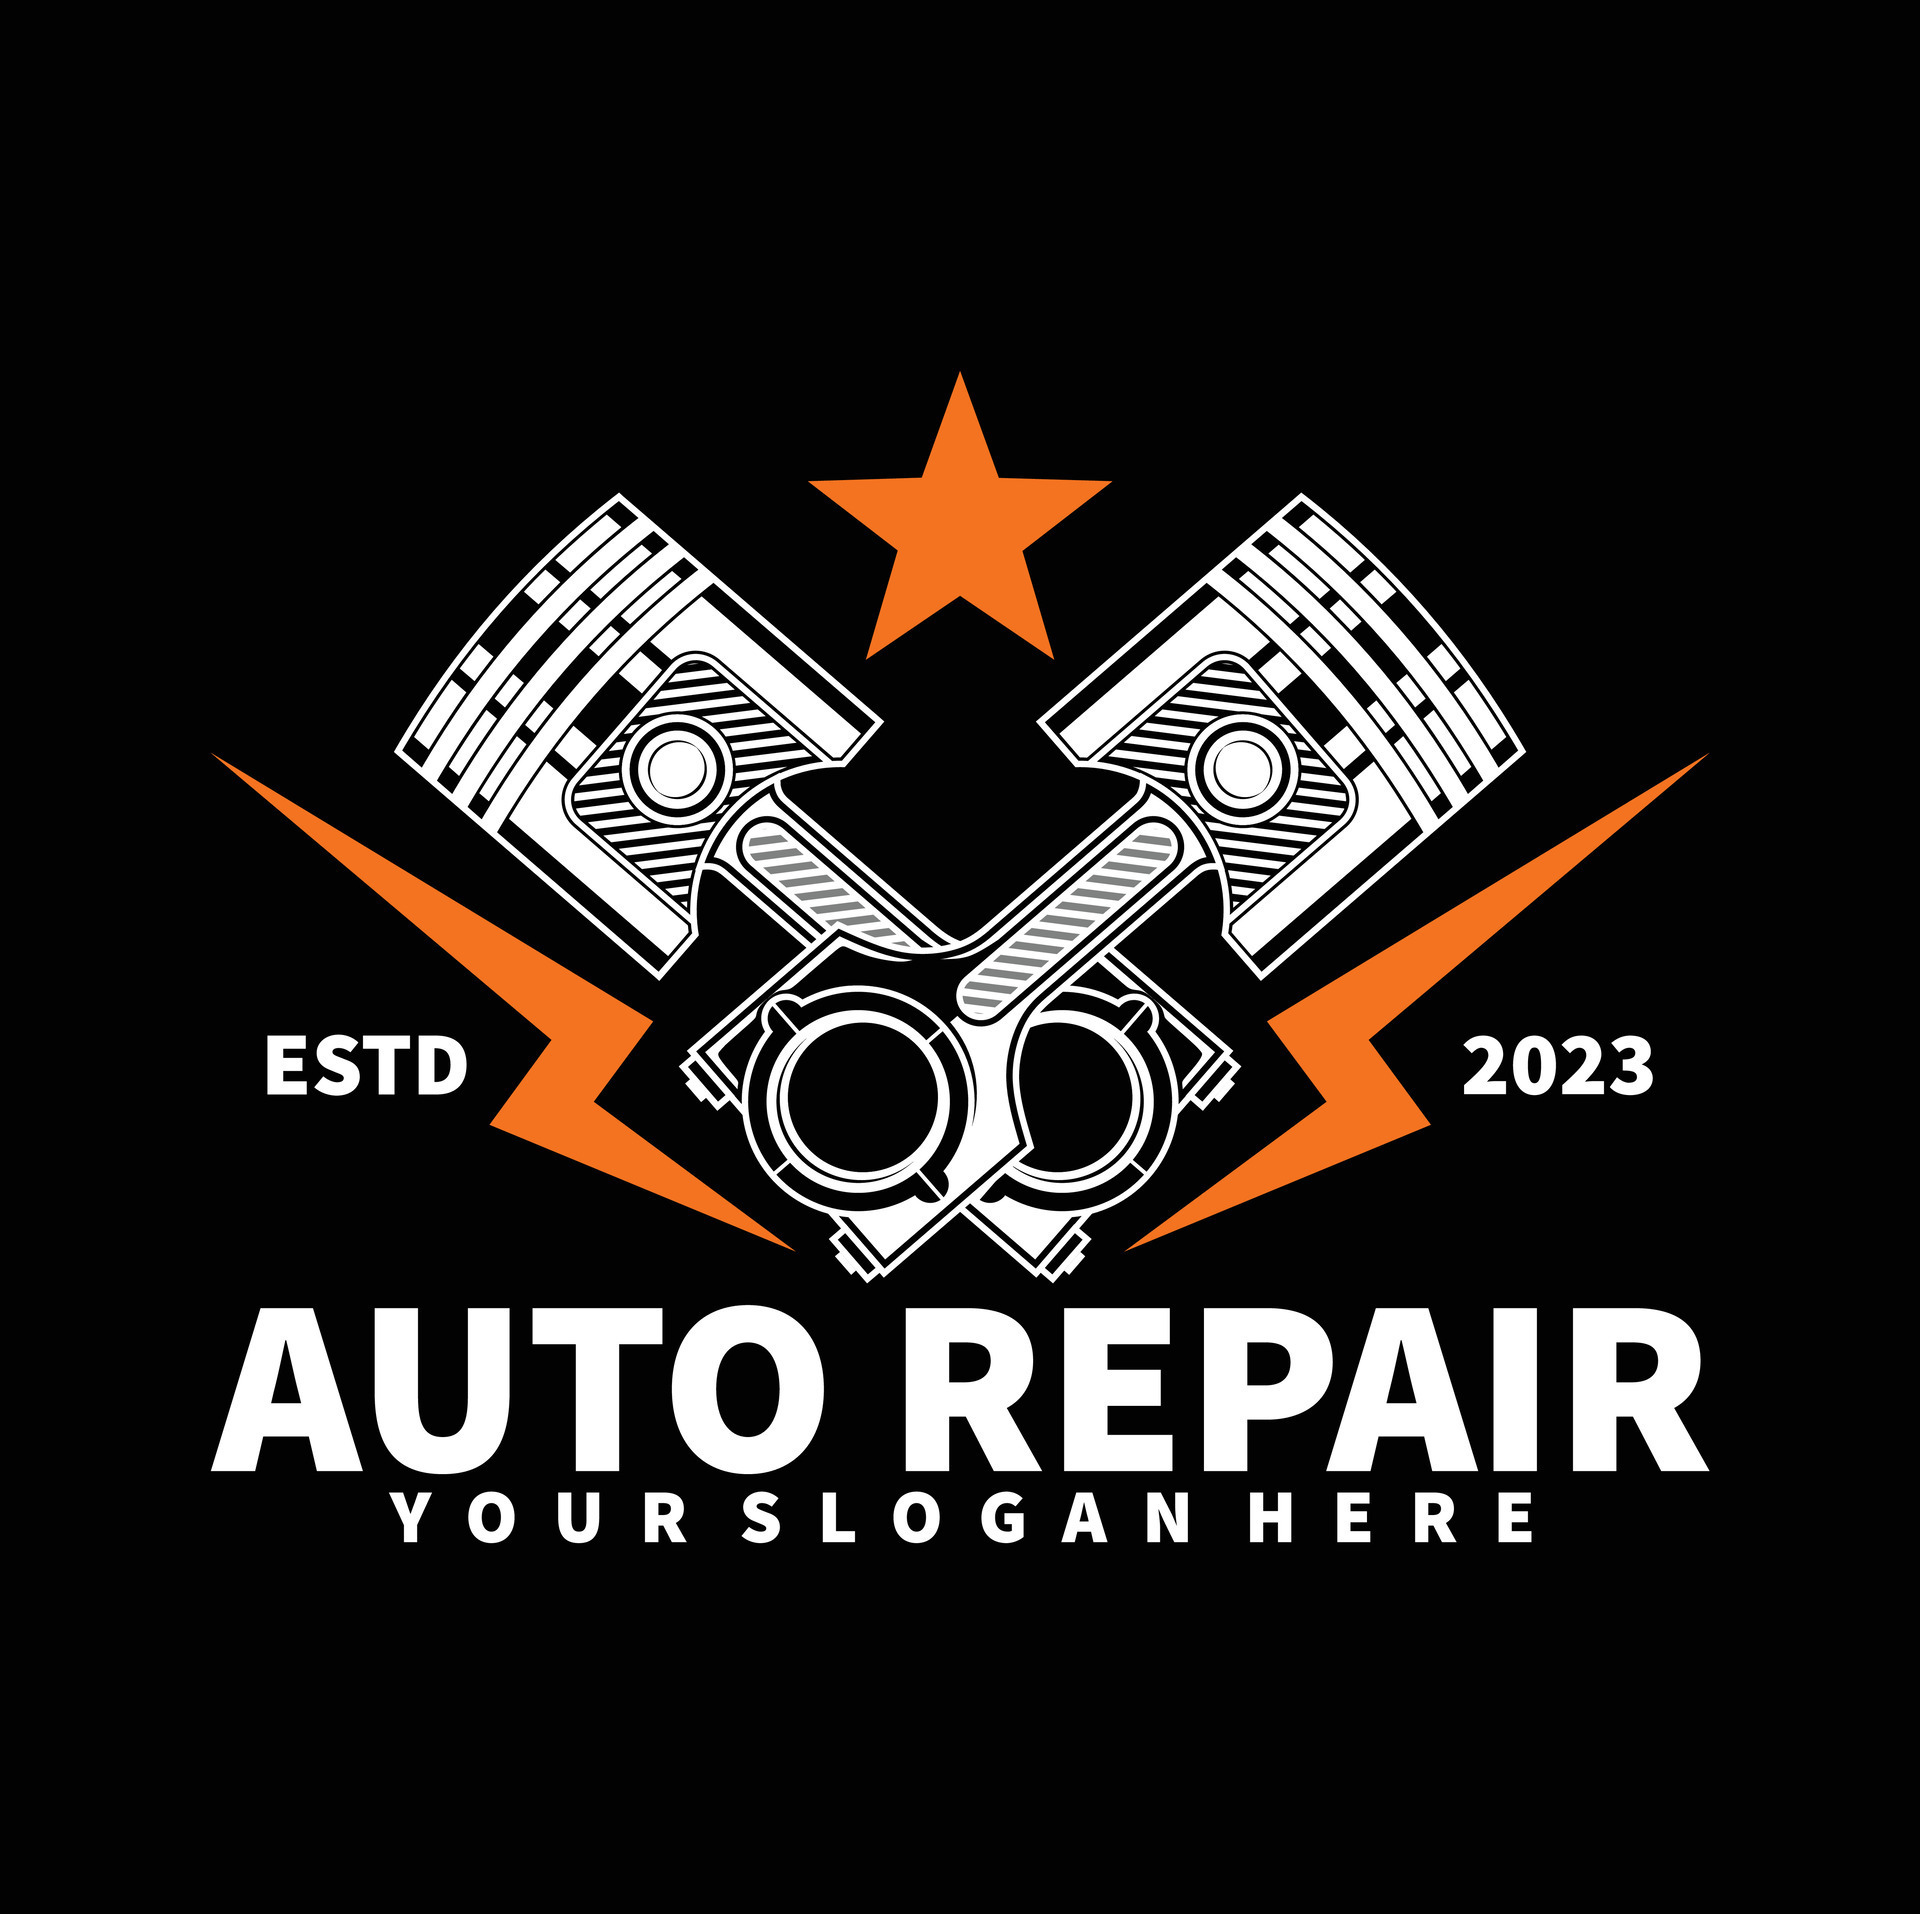 Auto center garage service and repair logo Vector Image